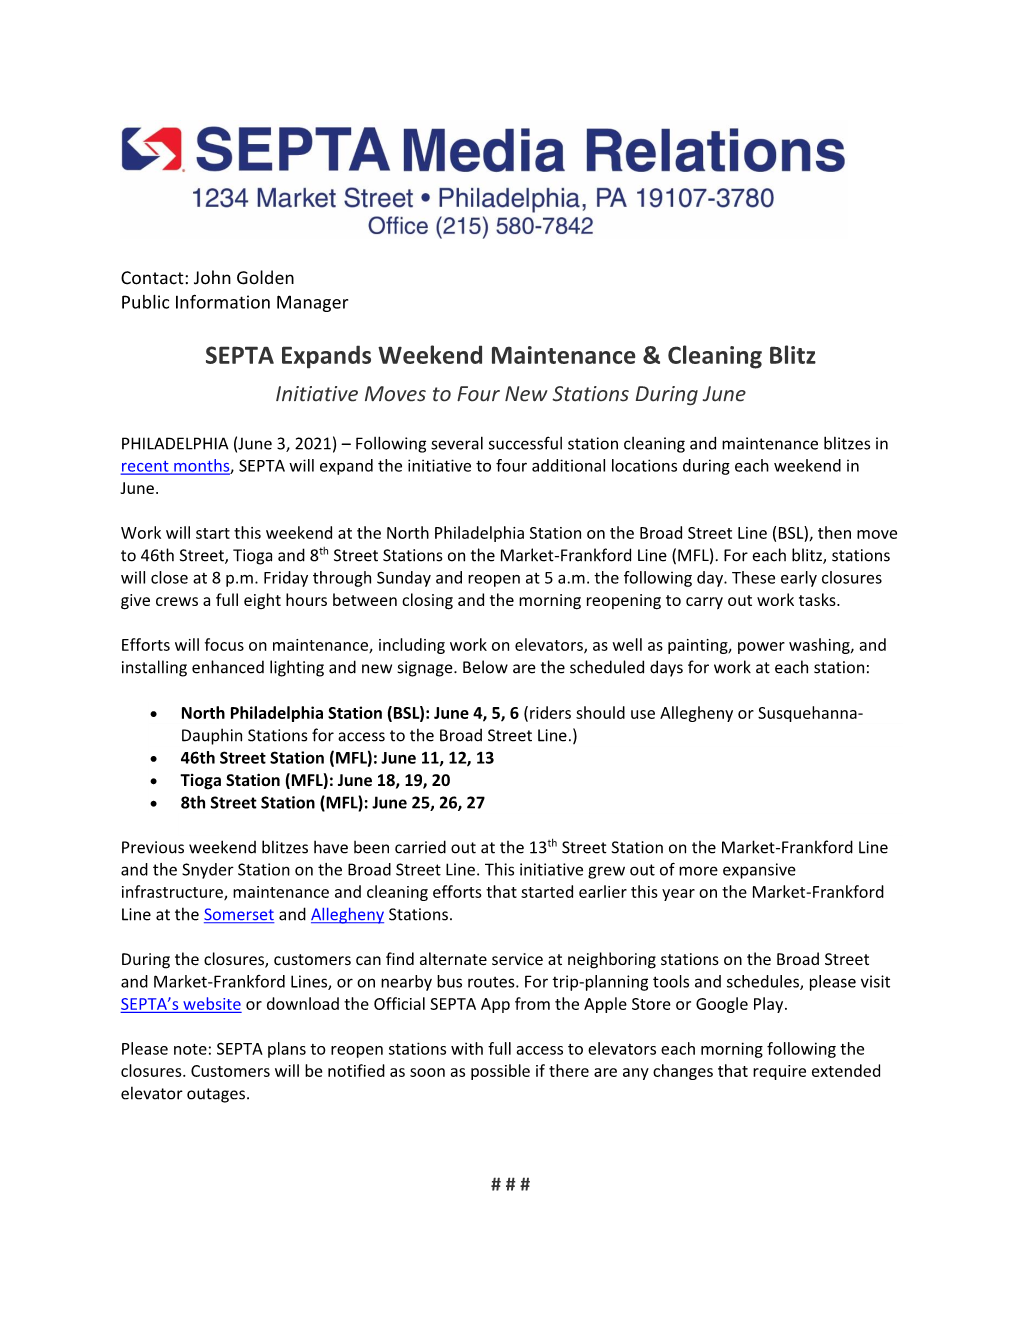 SEPTA Expands Weekend Maintenance & Cleaning Blitz